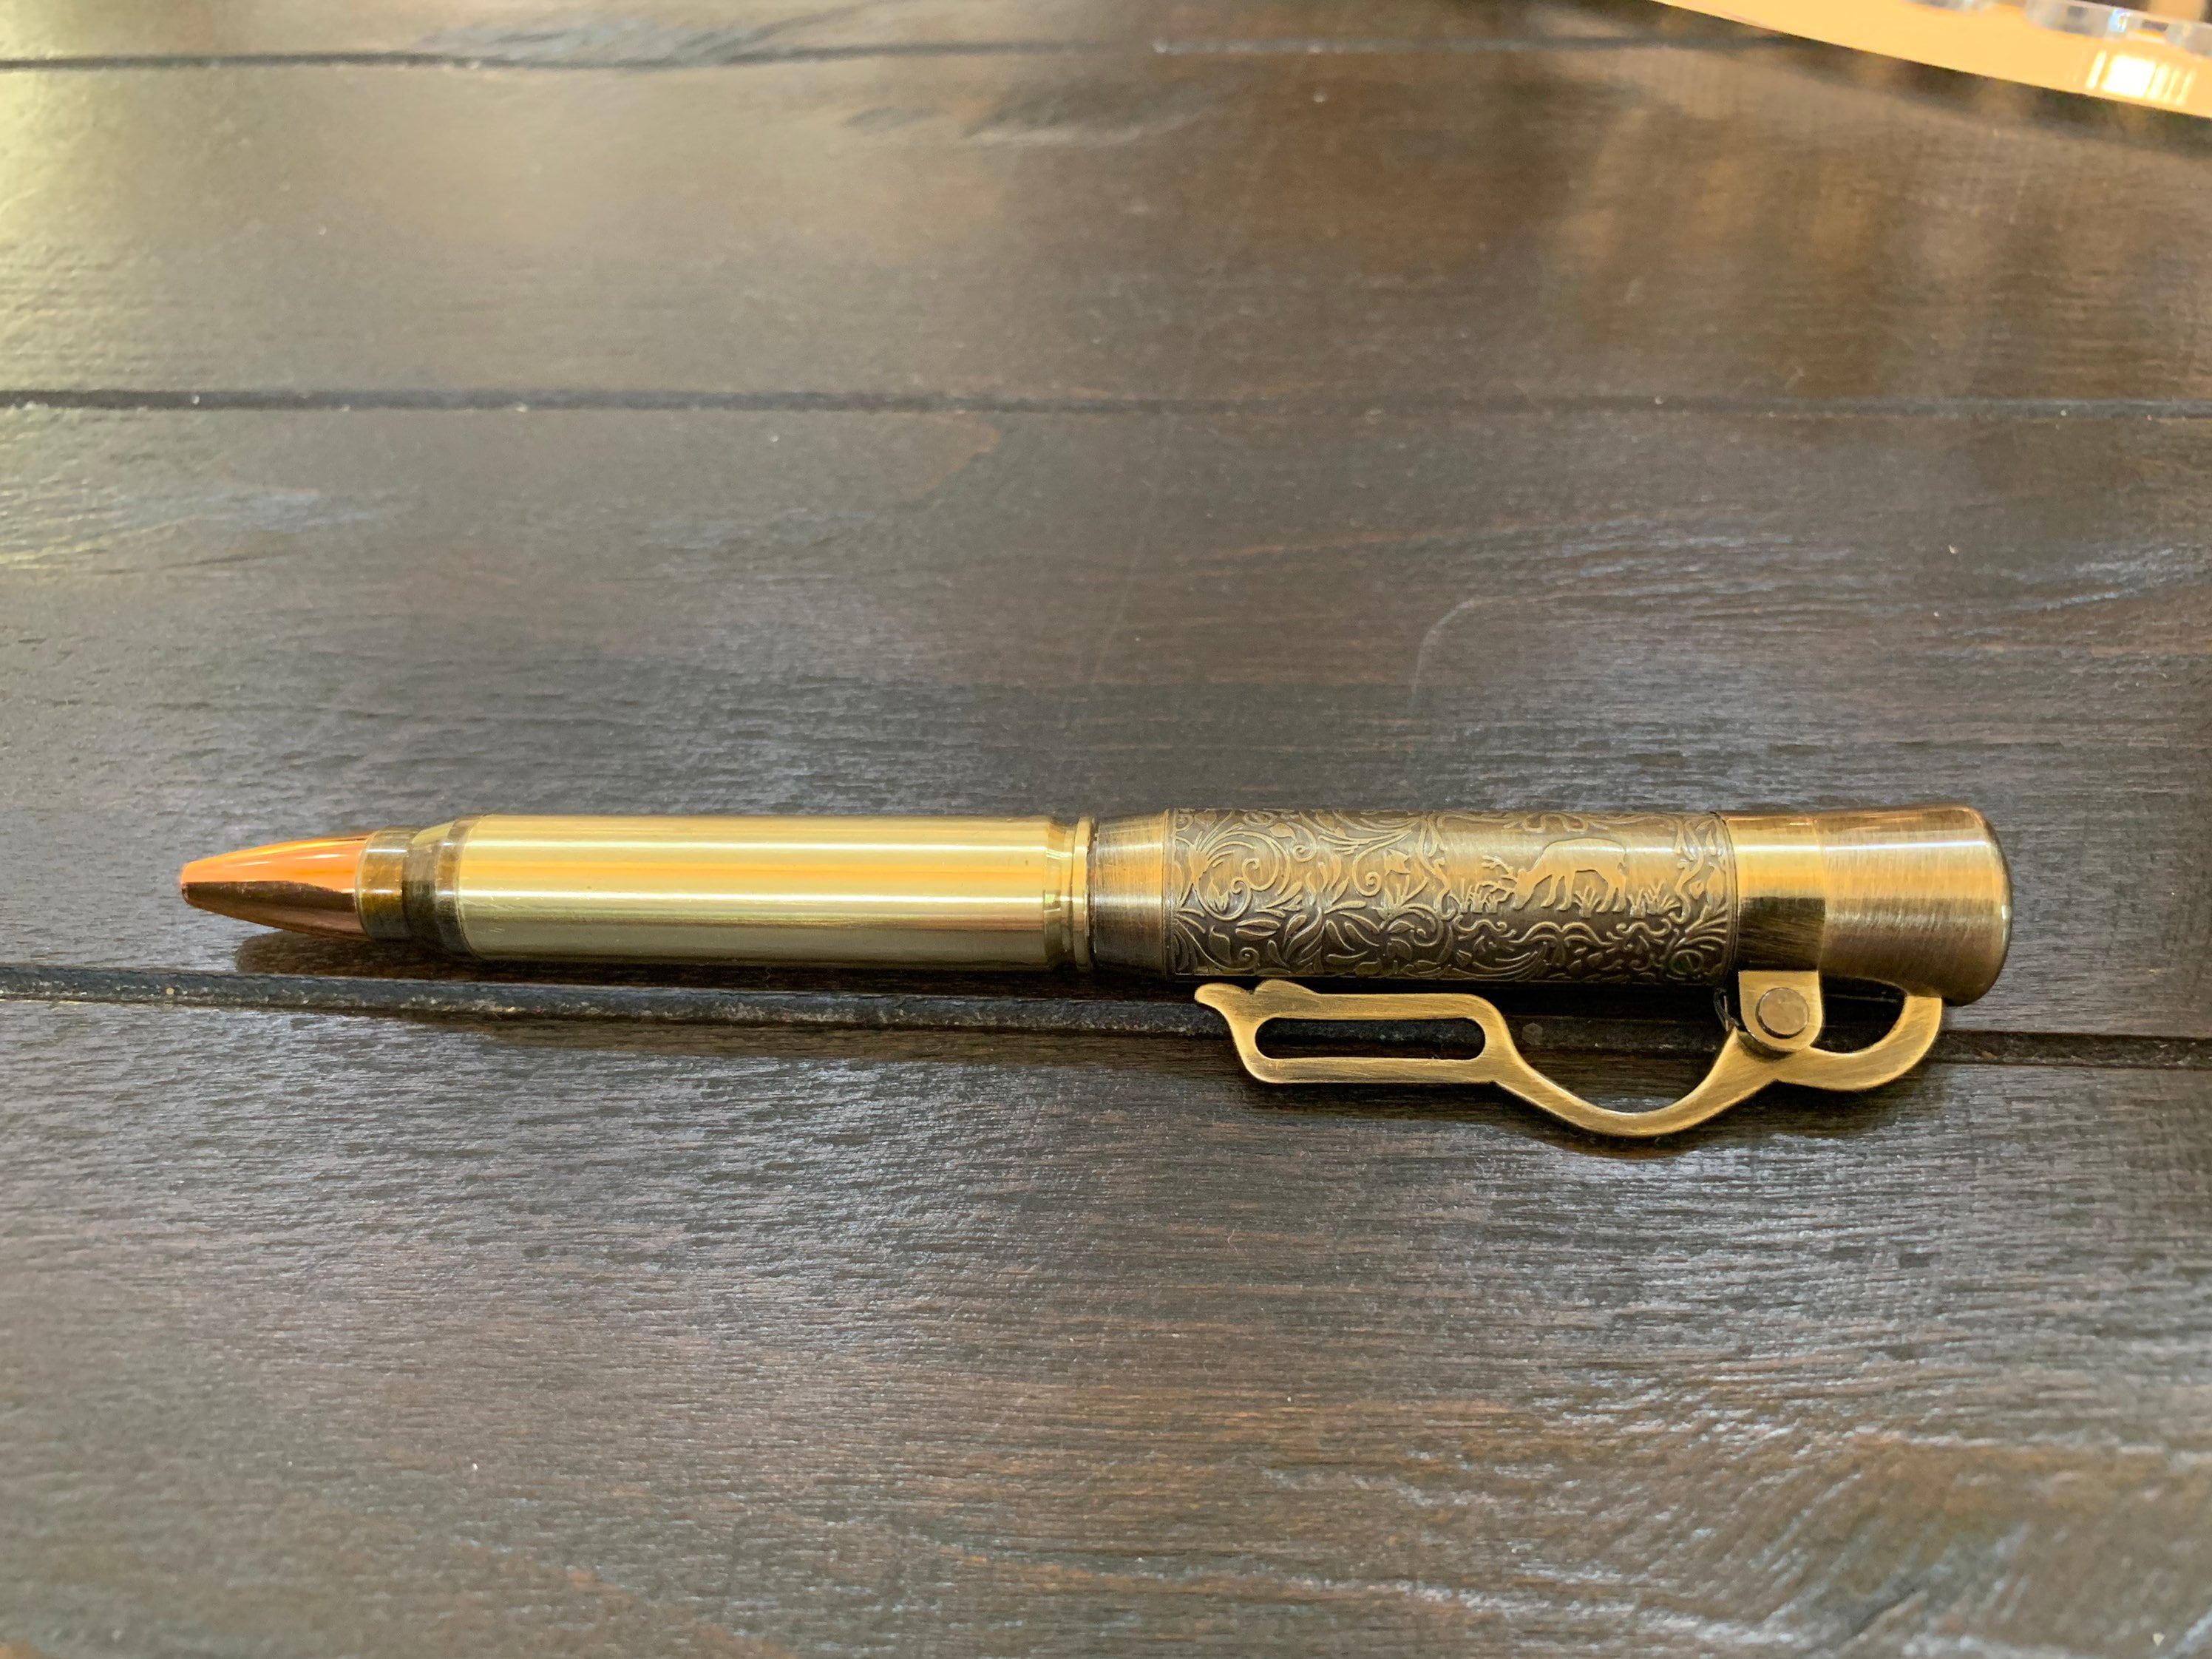 Bullet Pens - Old Southern Brass